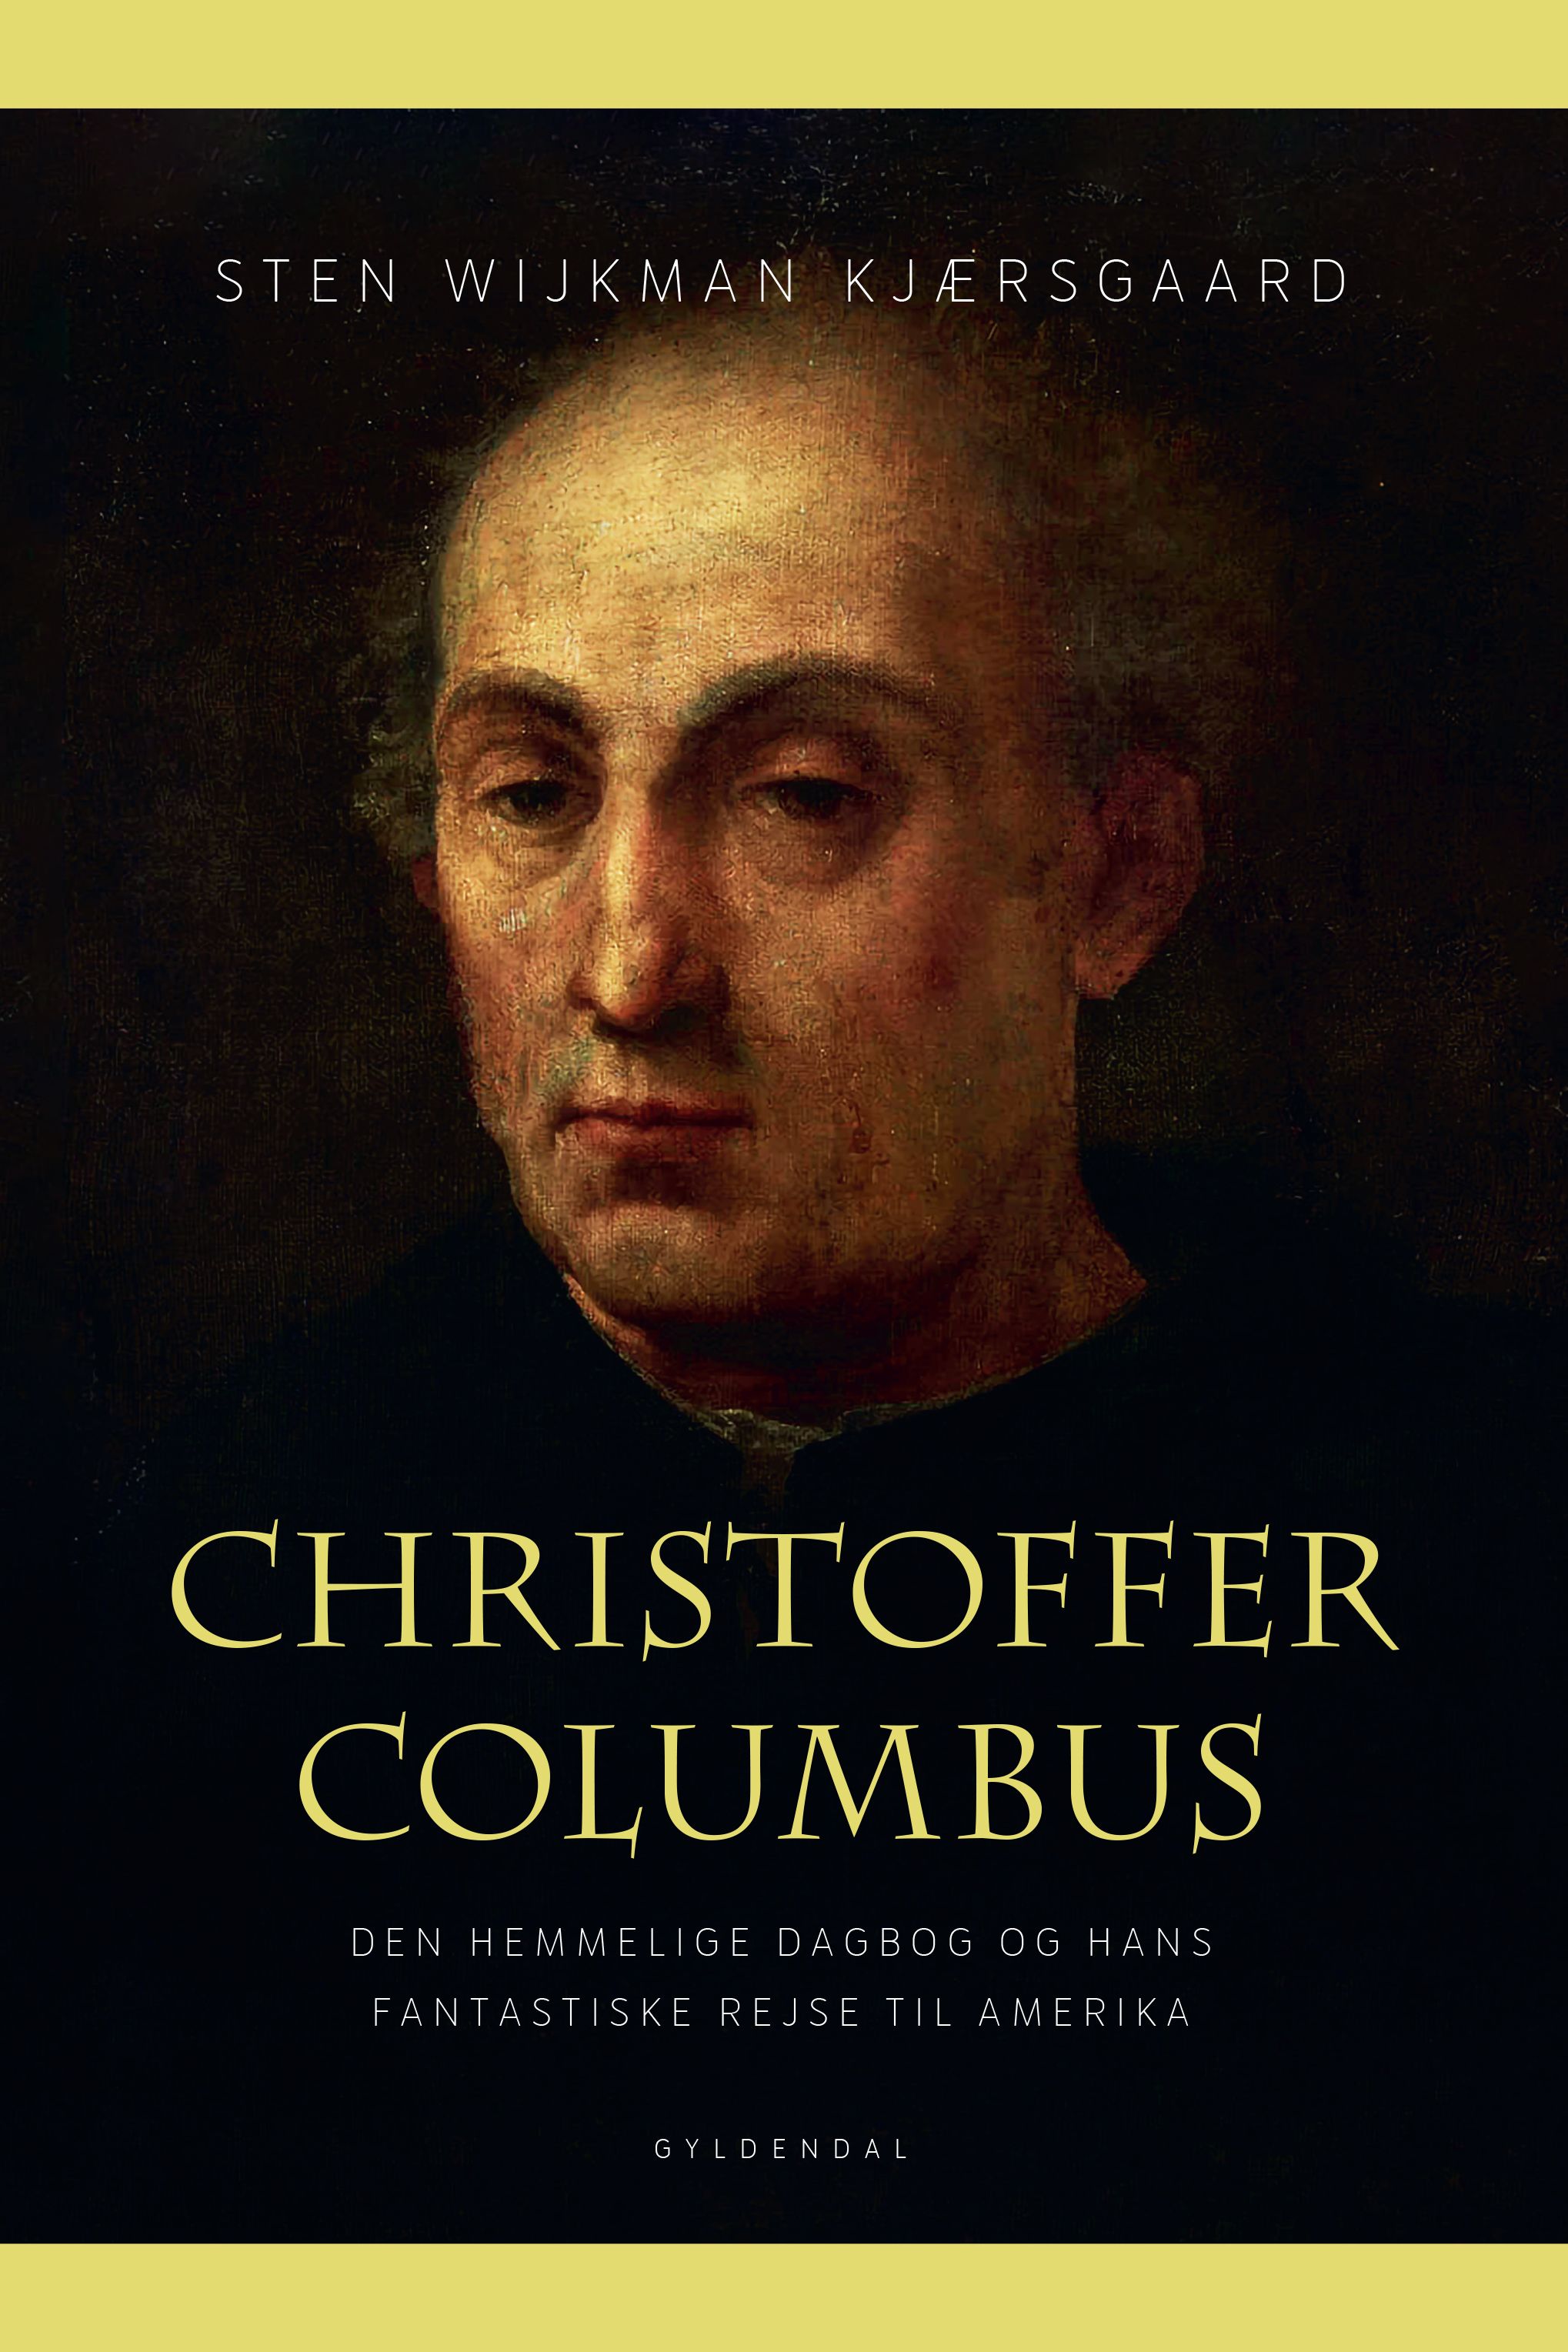 Christoffer Columbus, eBook by Sten Wijkman Kjærsgaard